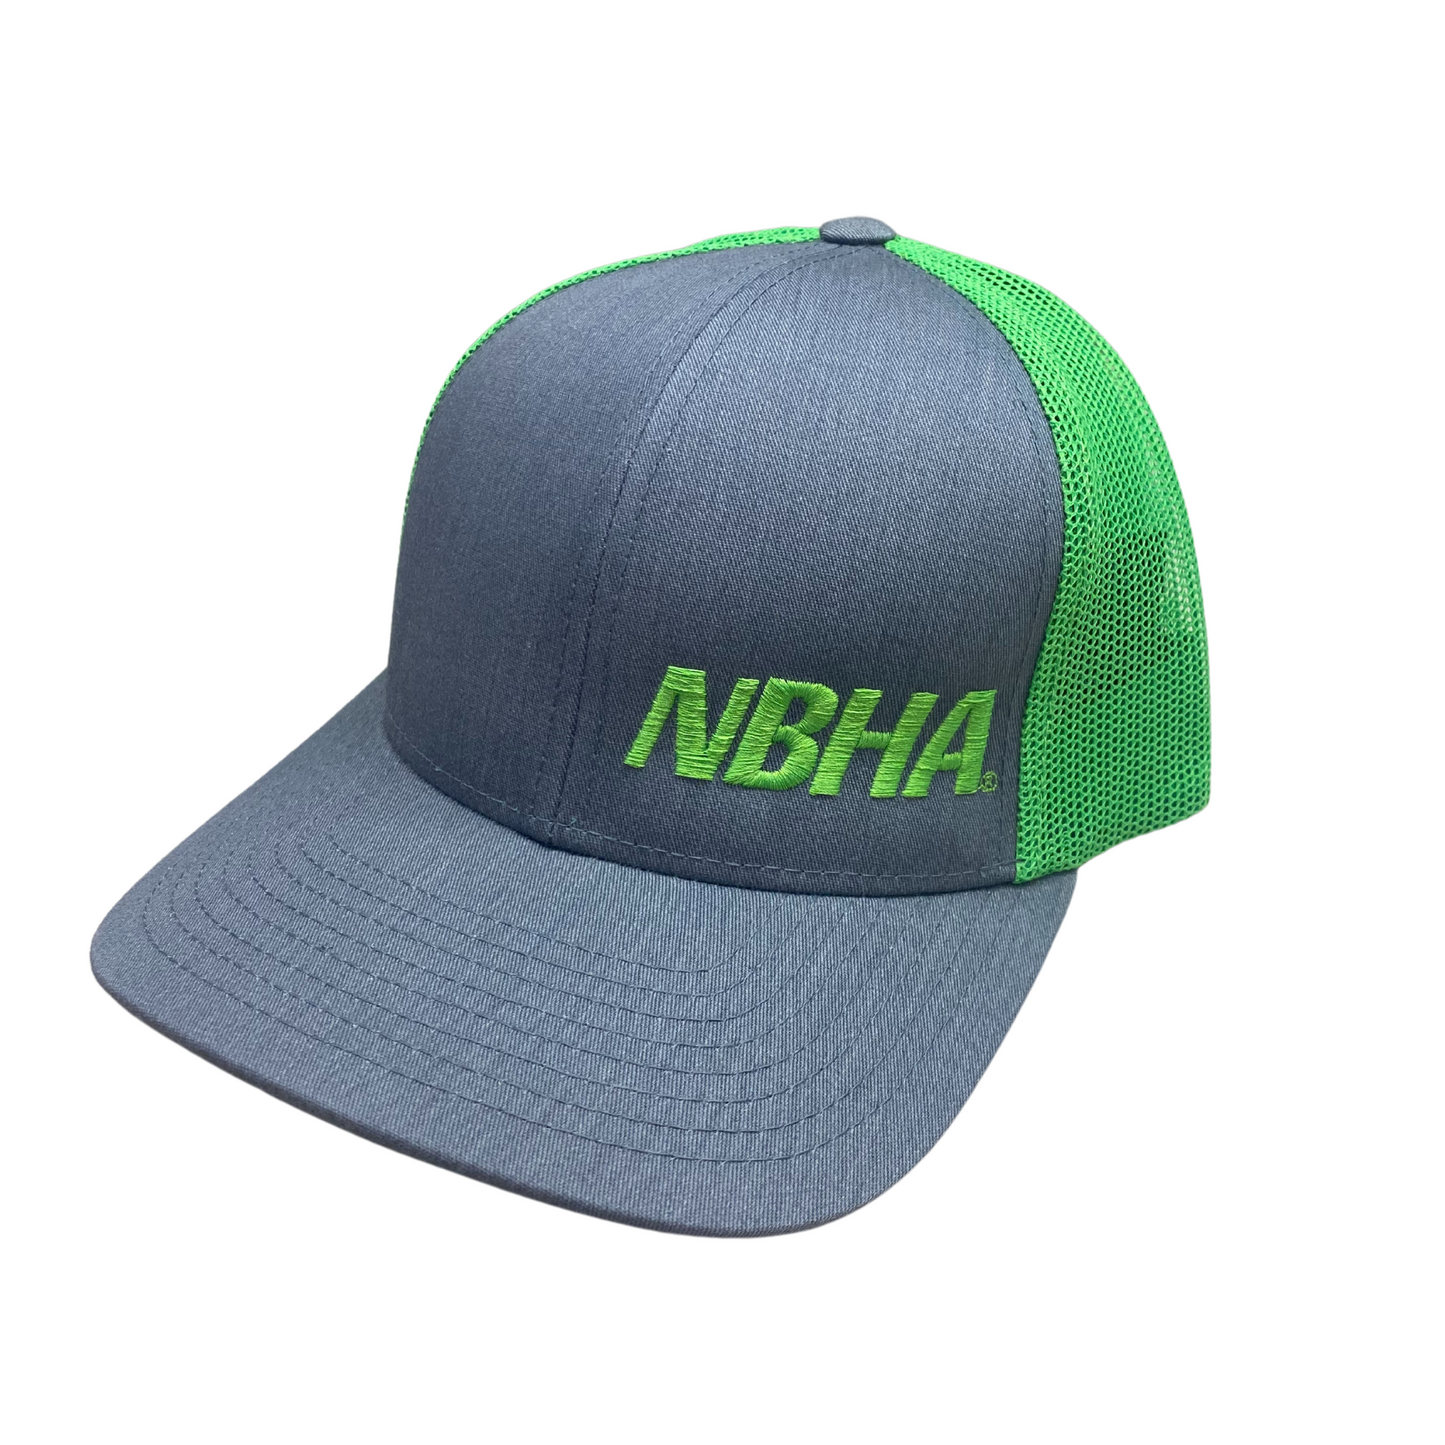 NBHA Trucker Hat : Grey/Neon Green